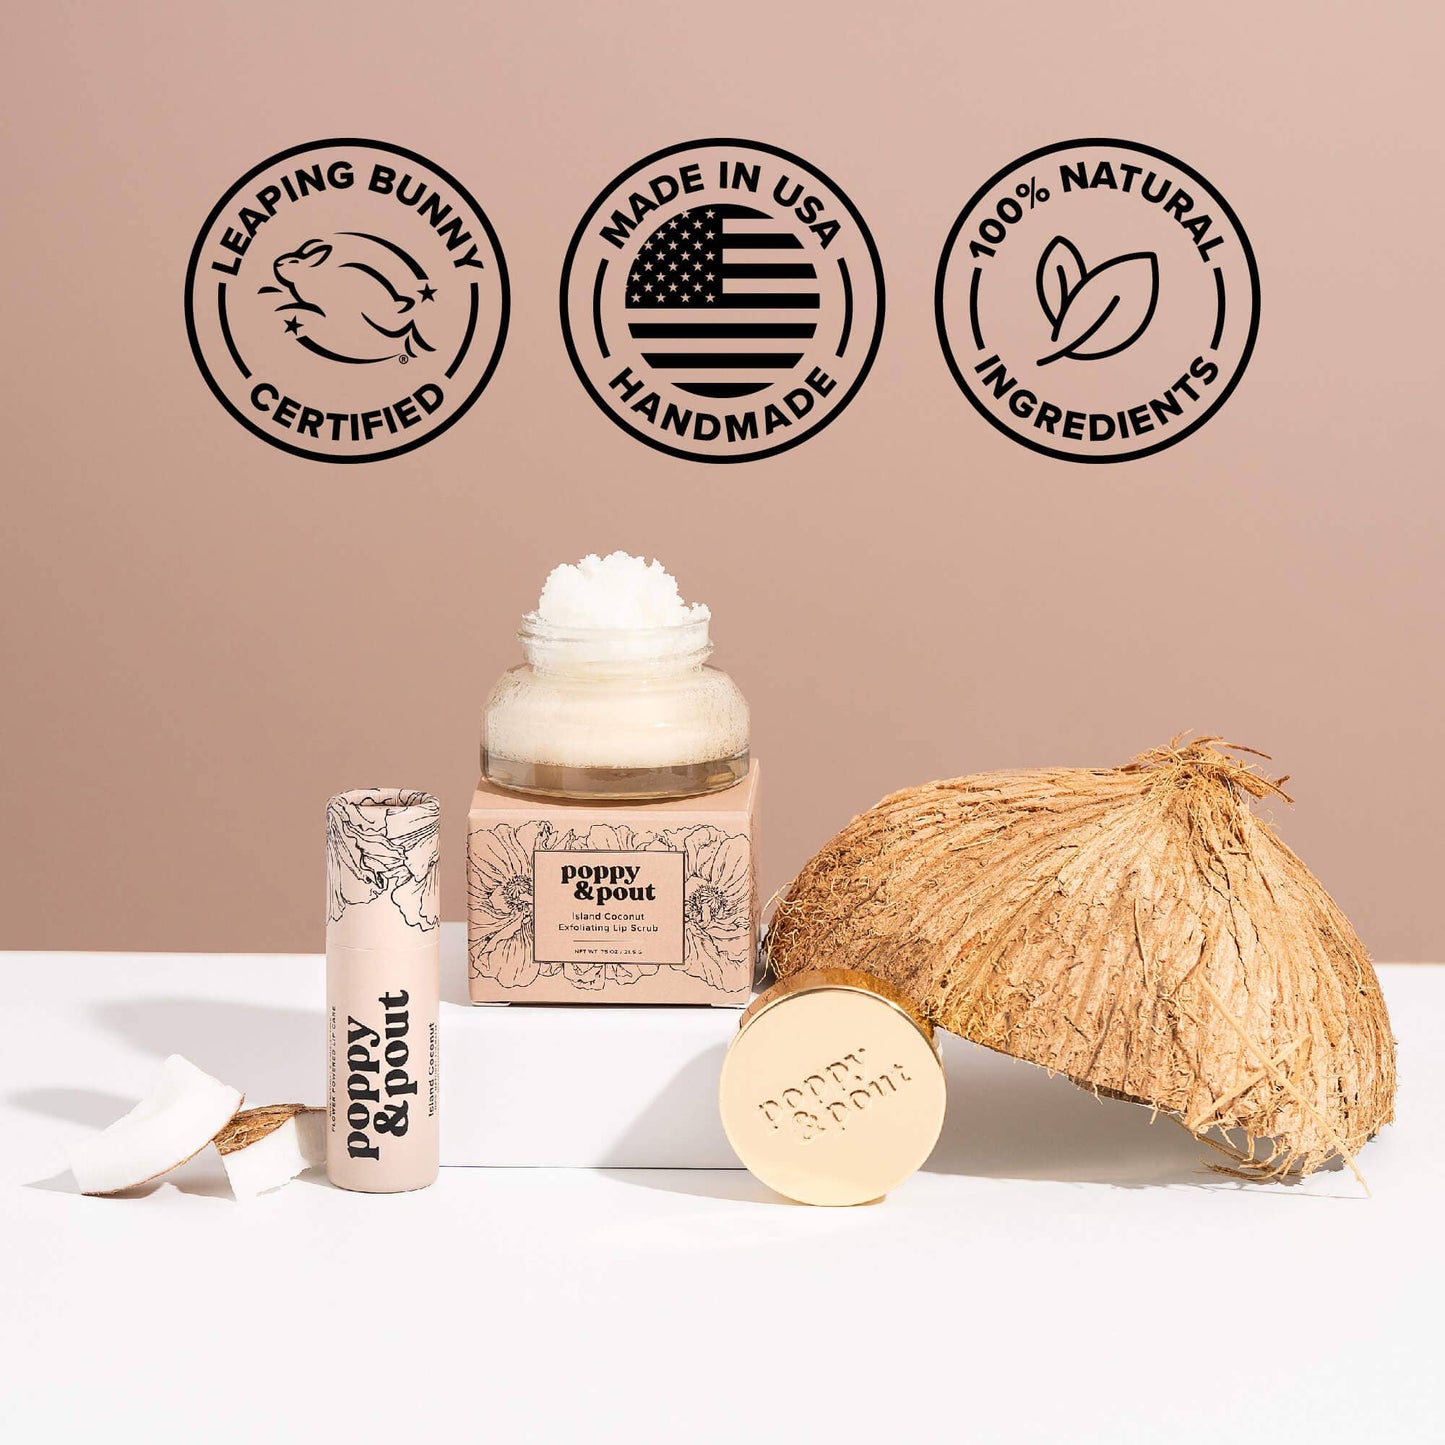 Island Coconut Plant-Based Lip Balm